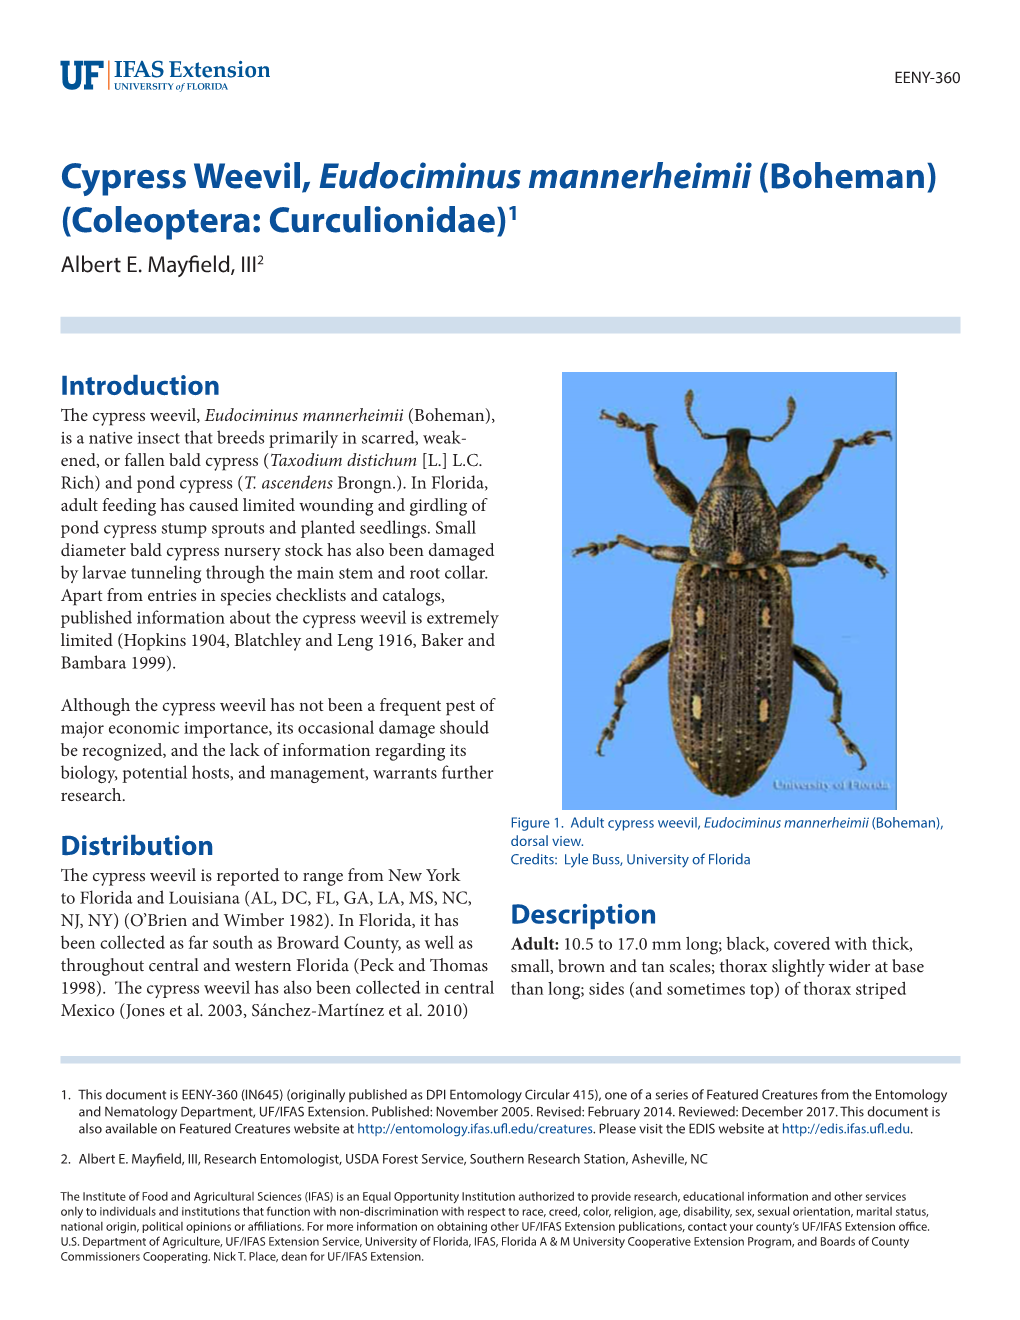 Cypress Weevil, Eudociminus Mannerheimii (Boheman) (Coleoptera: Curculionidae)1 Albert E